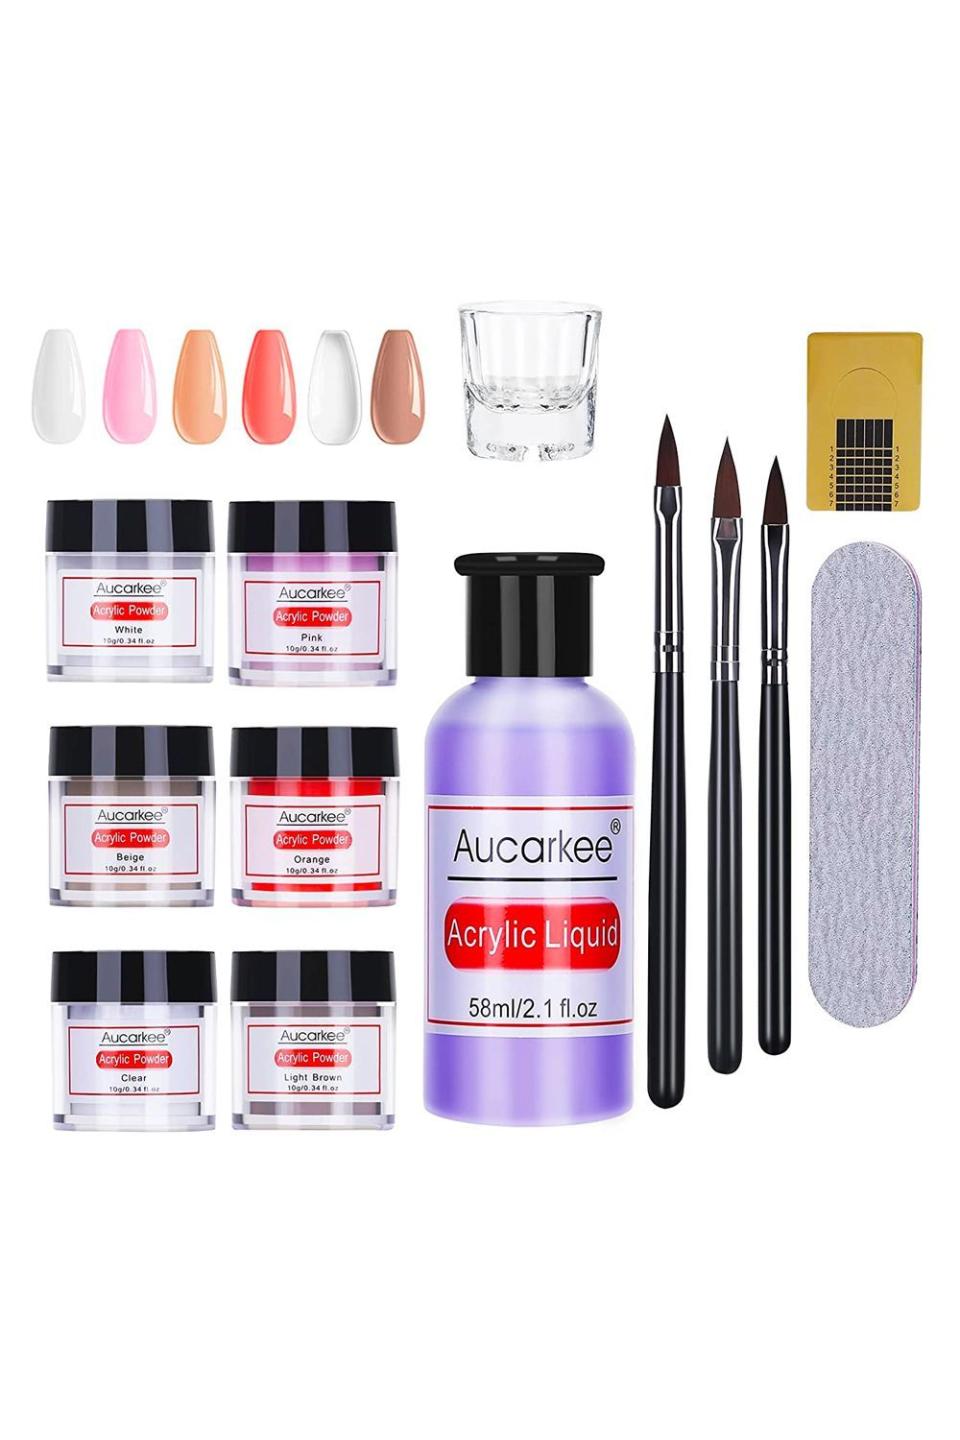 4) Aucarkee Acrylic Nail Kit